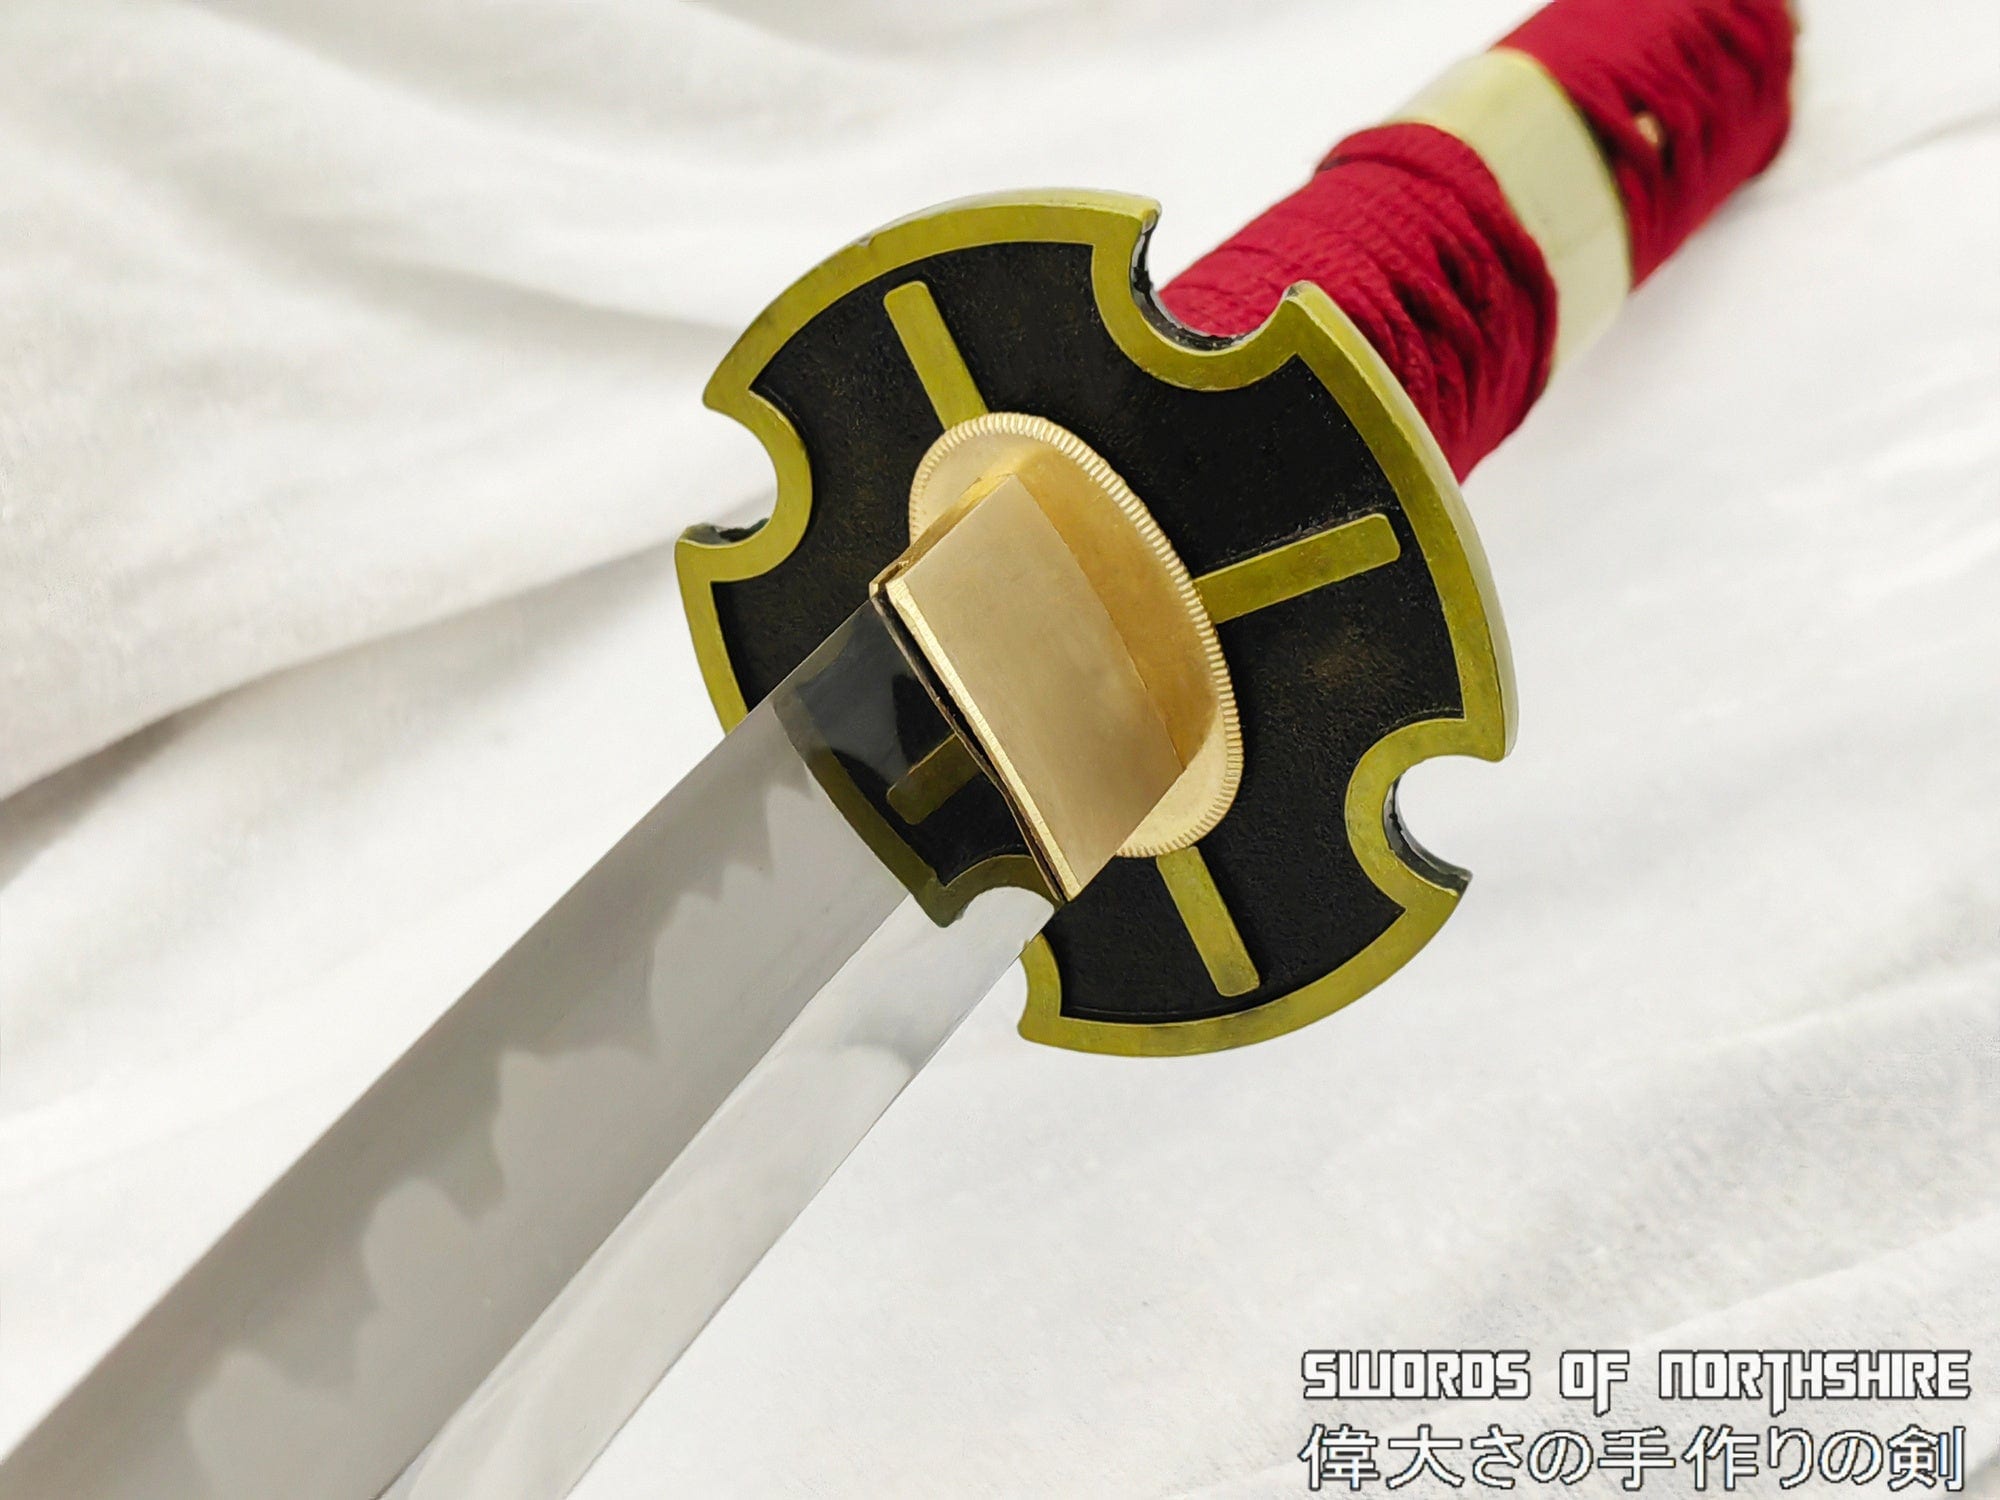 Sandai Kitetsu Cursed Sword and Stand Building Blocks – Kawaiies